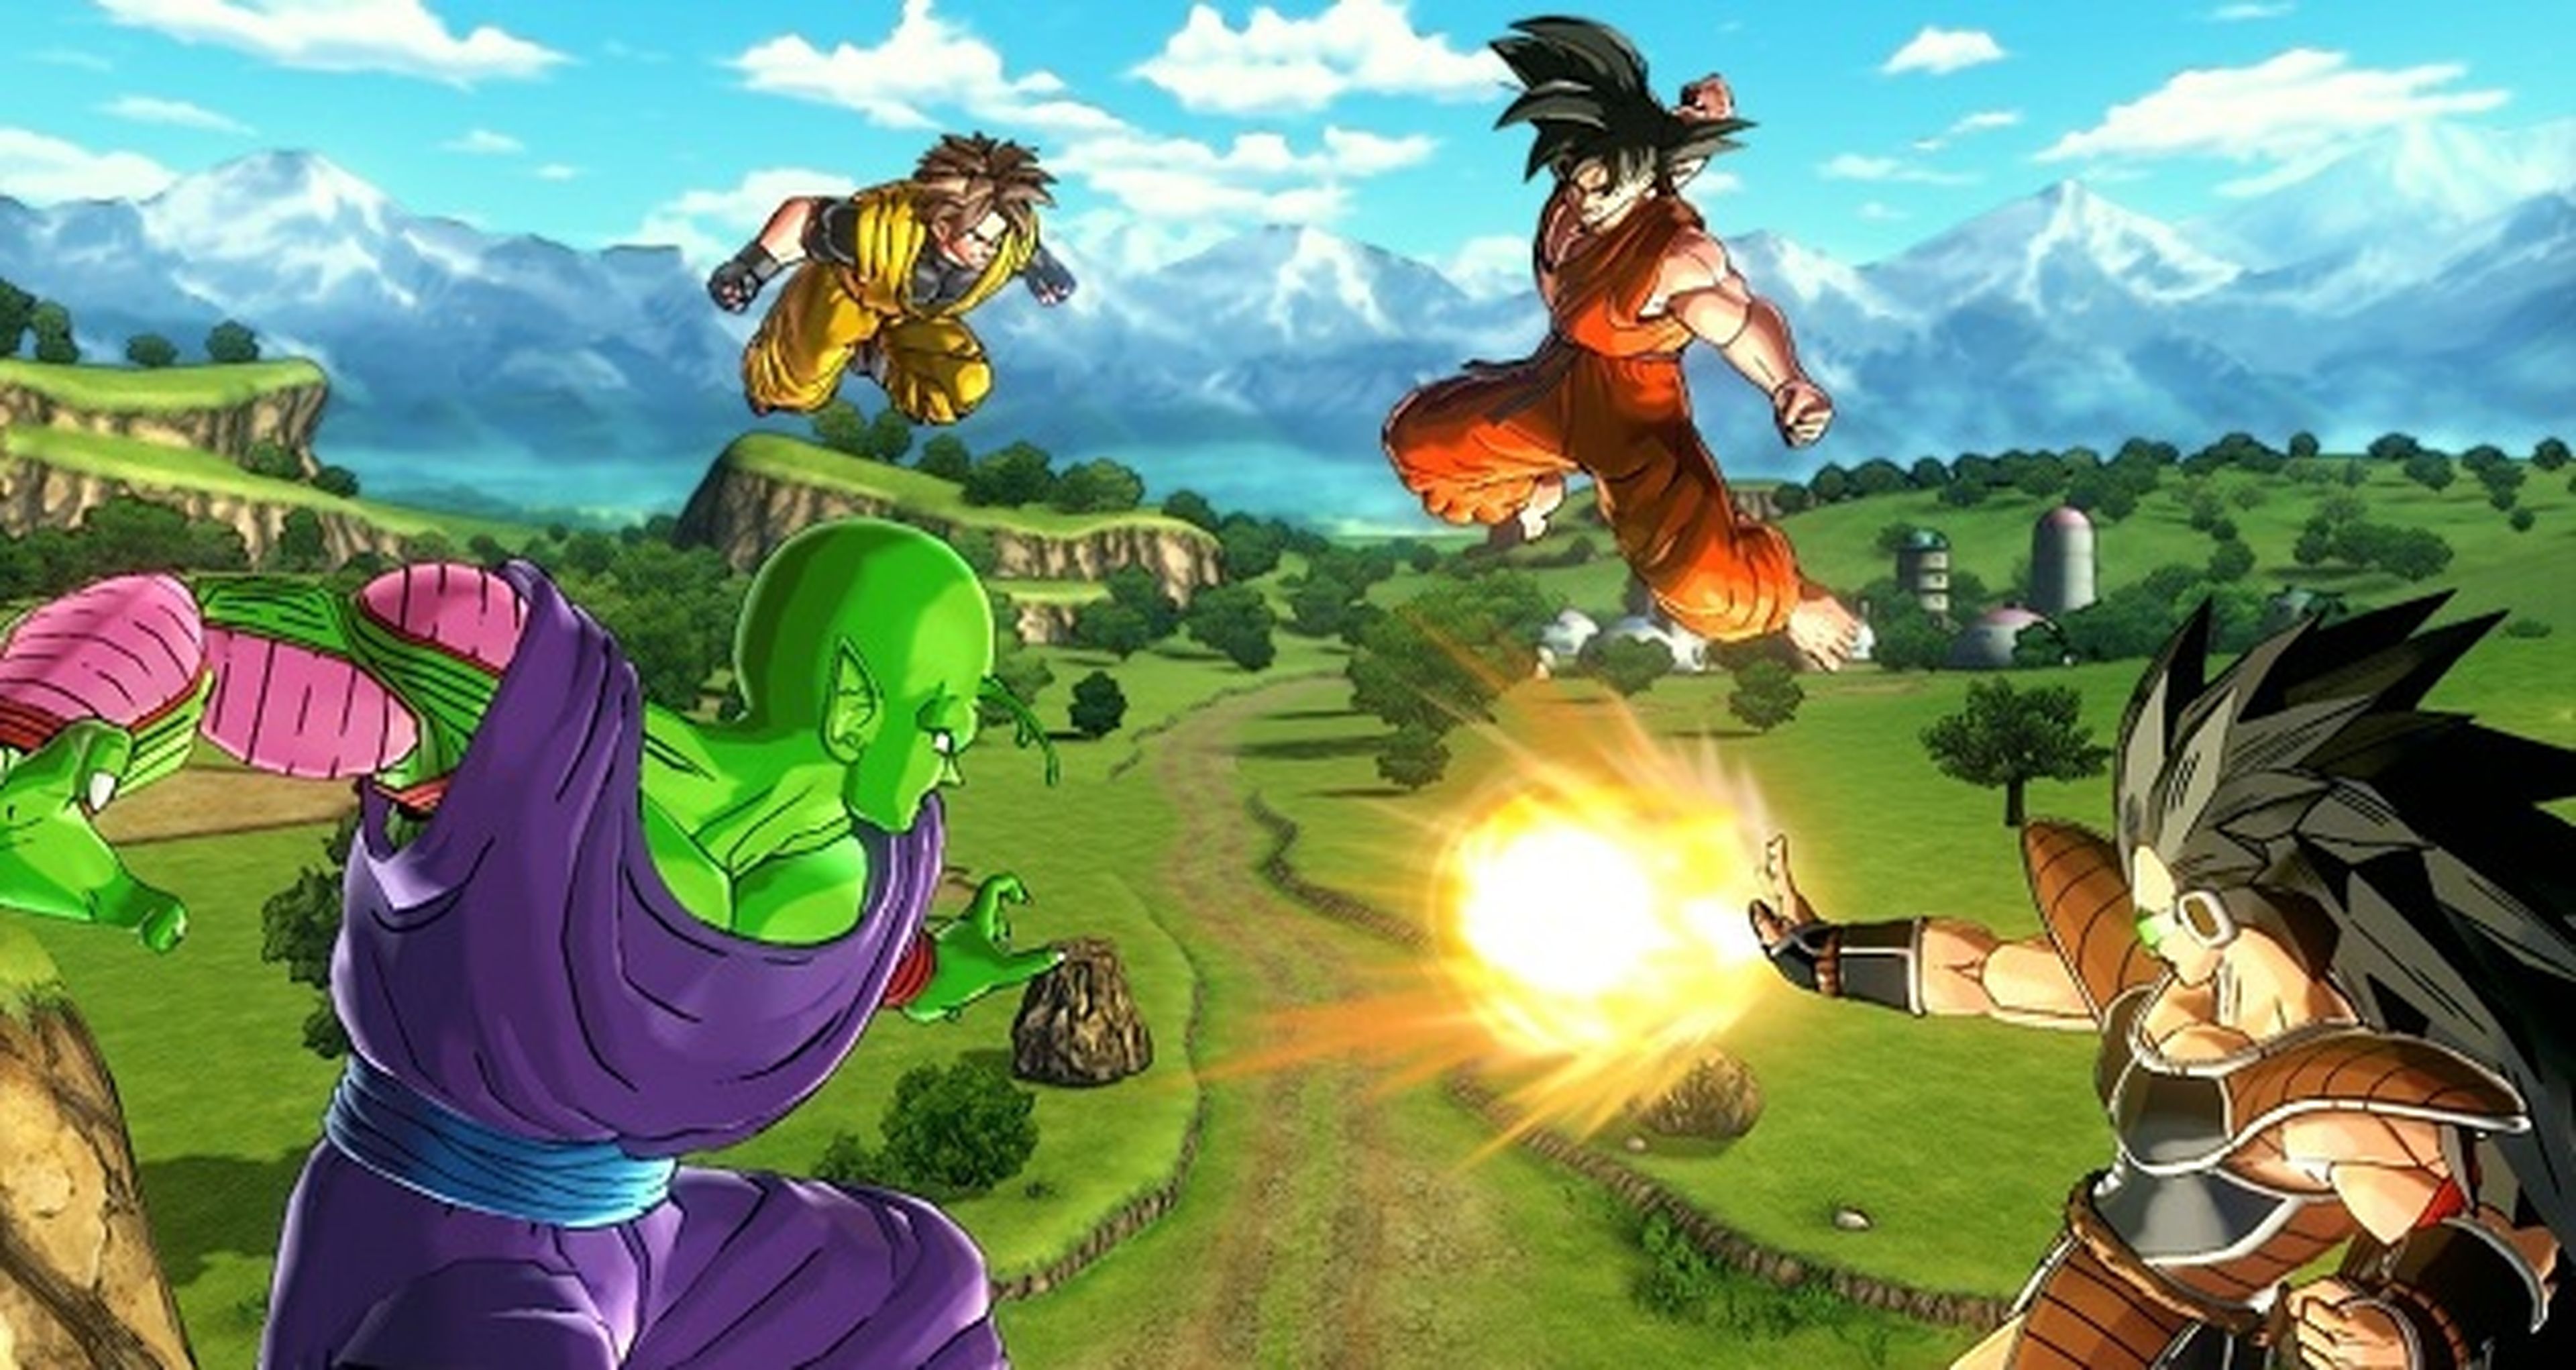 GAME y Dragon Ball Xenoverse traen un nuevo ichibankuji